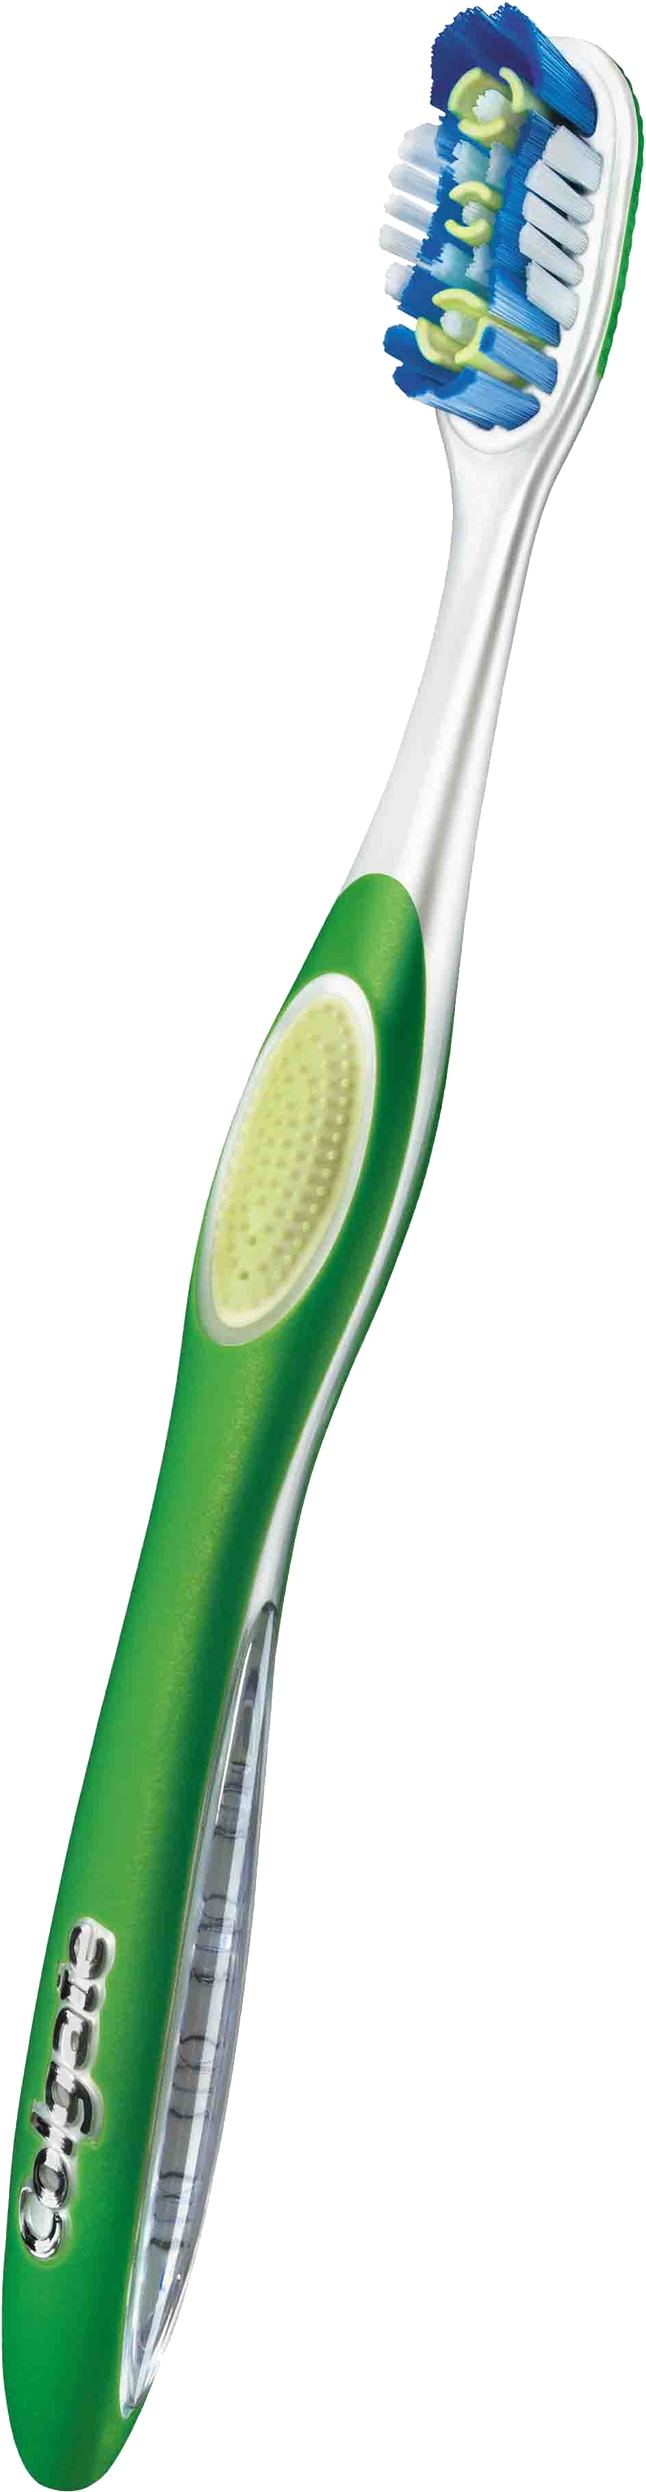 Toothbrush PNG - 16064